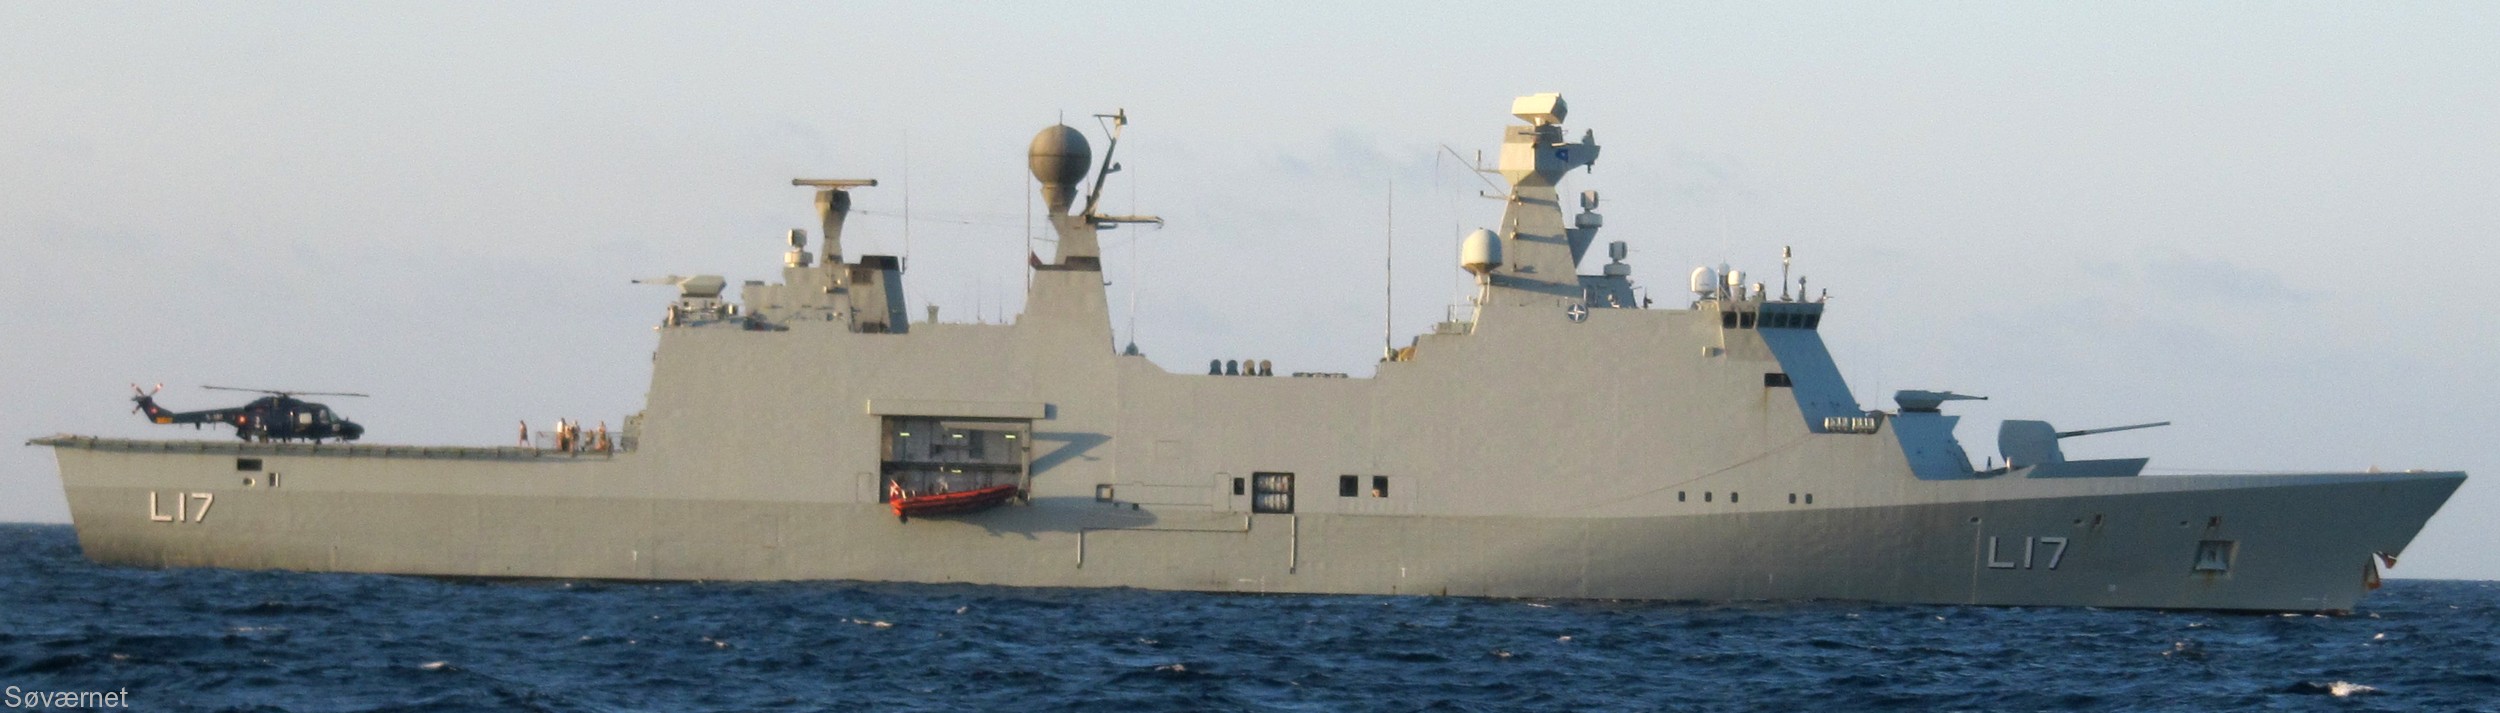 f-342 hdms esbern snare l-17 frigate command support ship royal danish navy 44